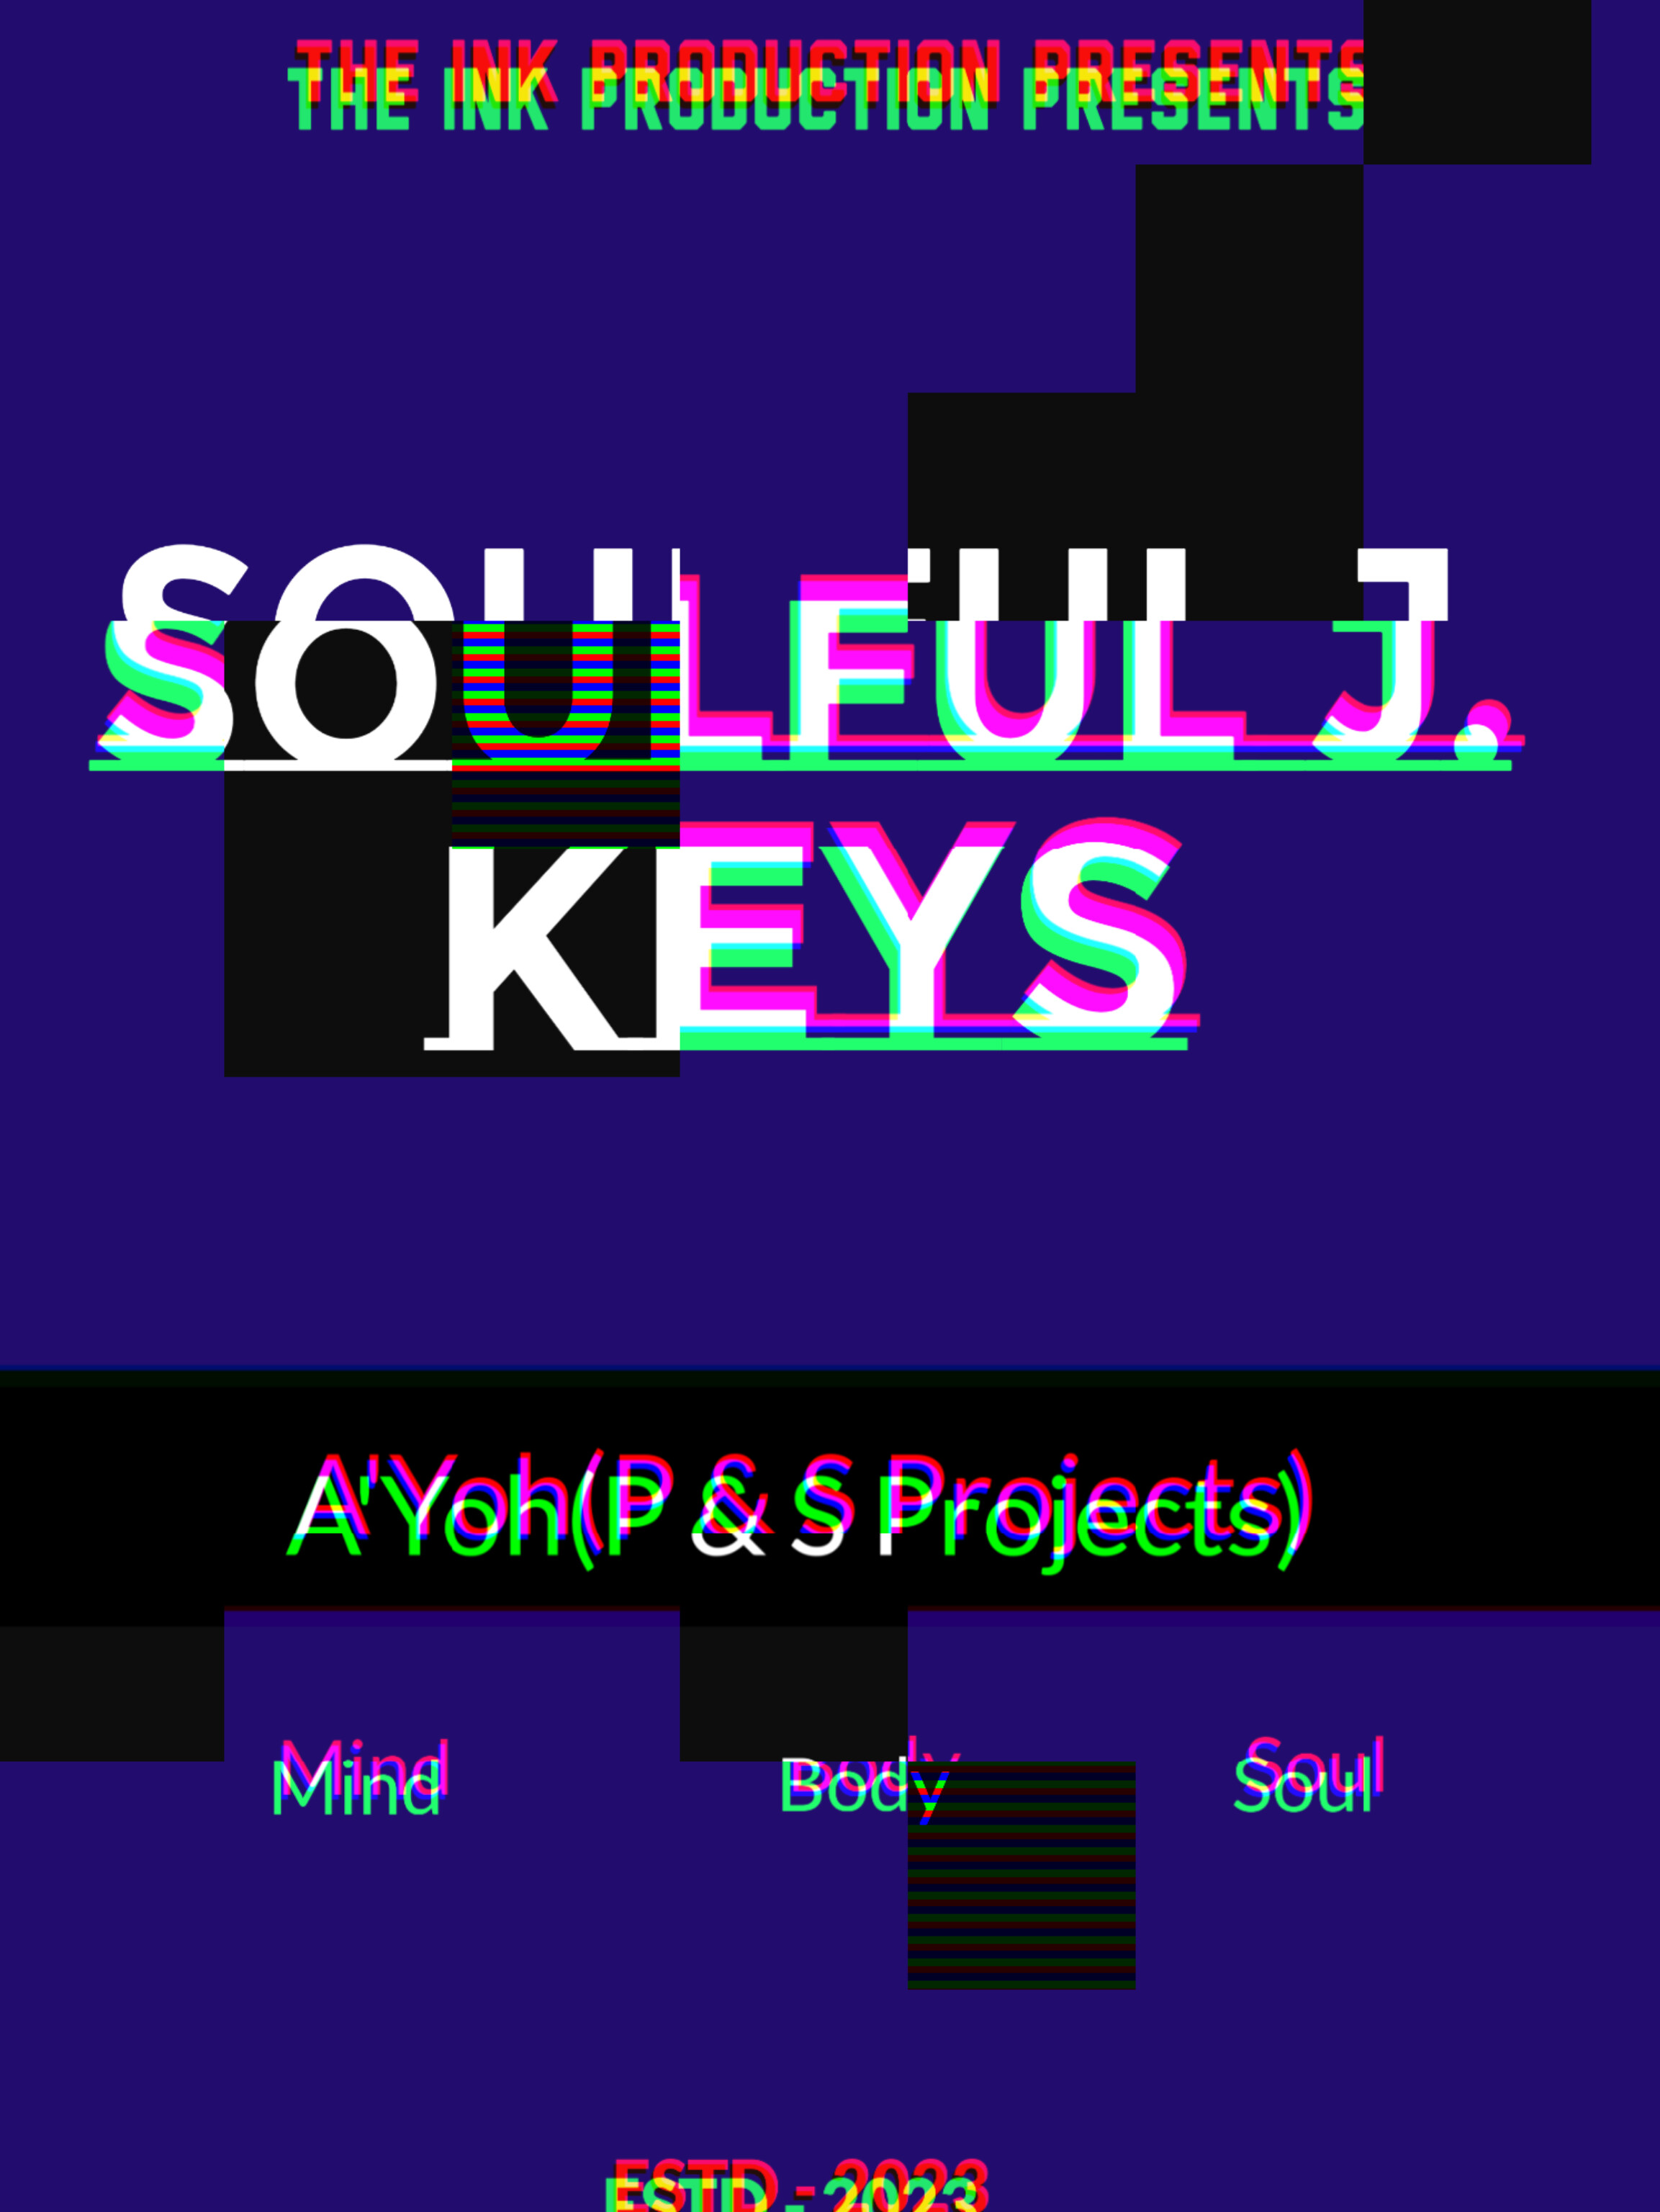 A'Yoh(P & S Projects) - Soulful J. Keys